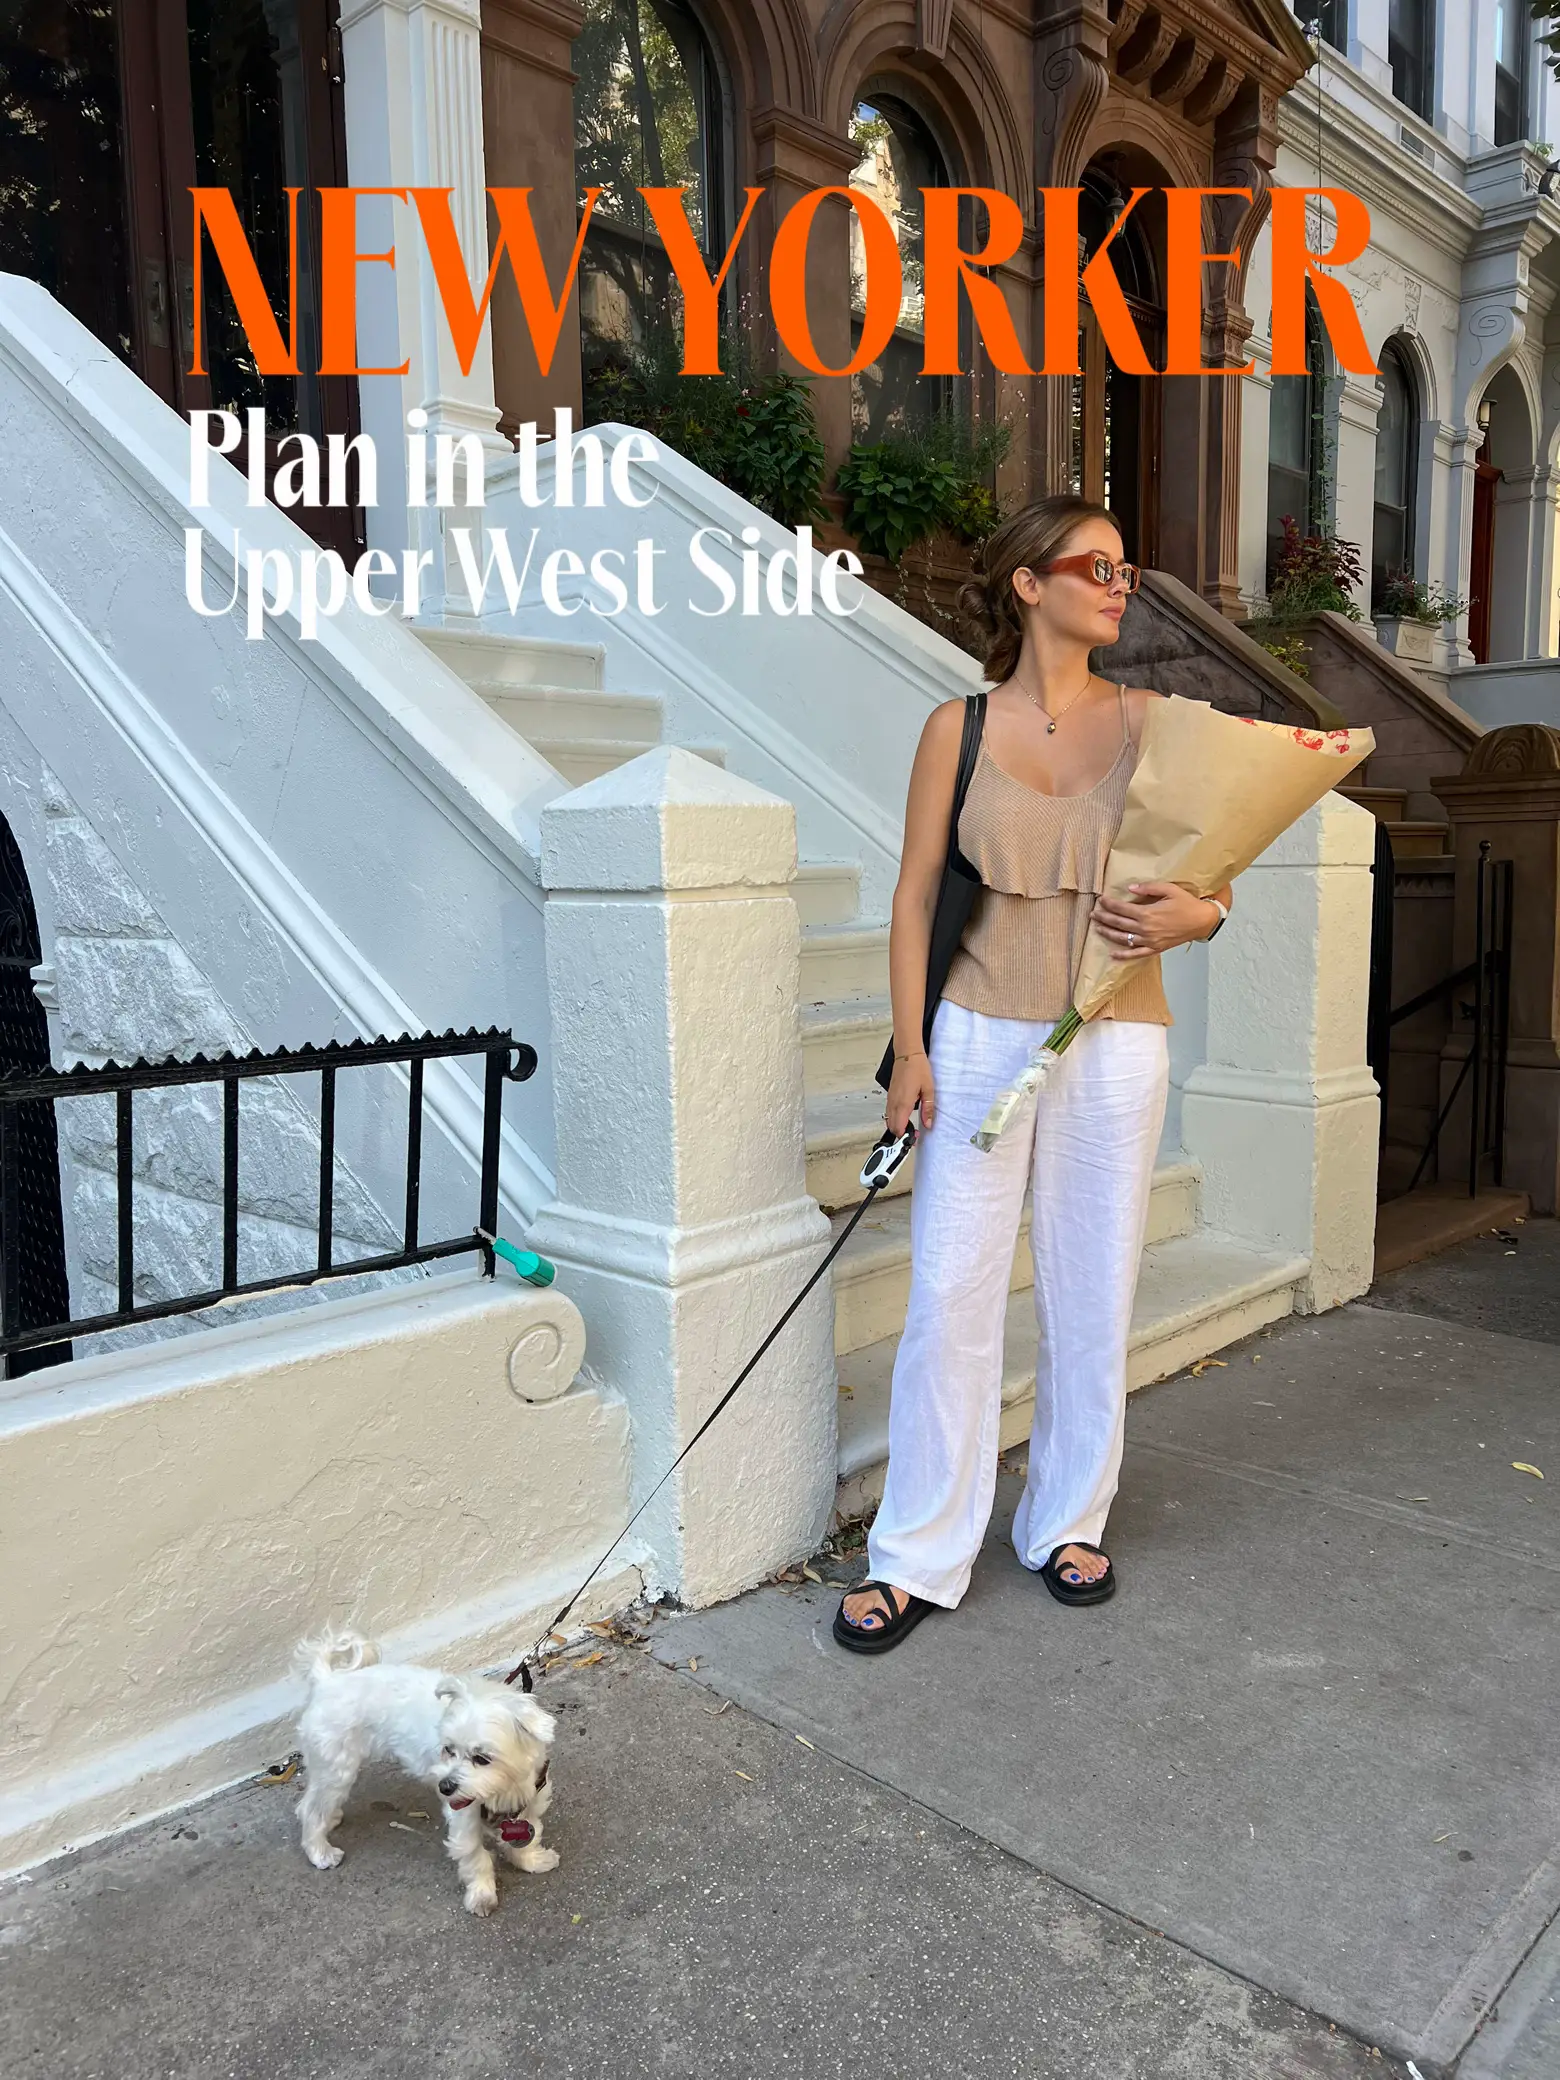 New Yorker plan - Upper West Side's images(0)